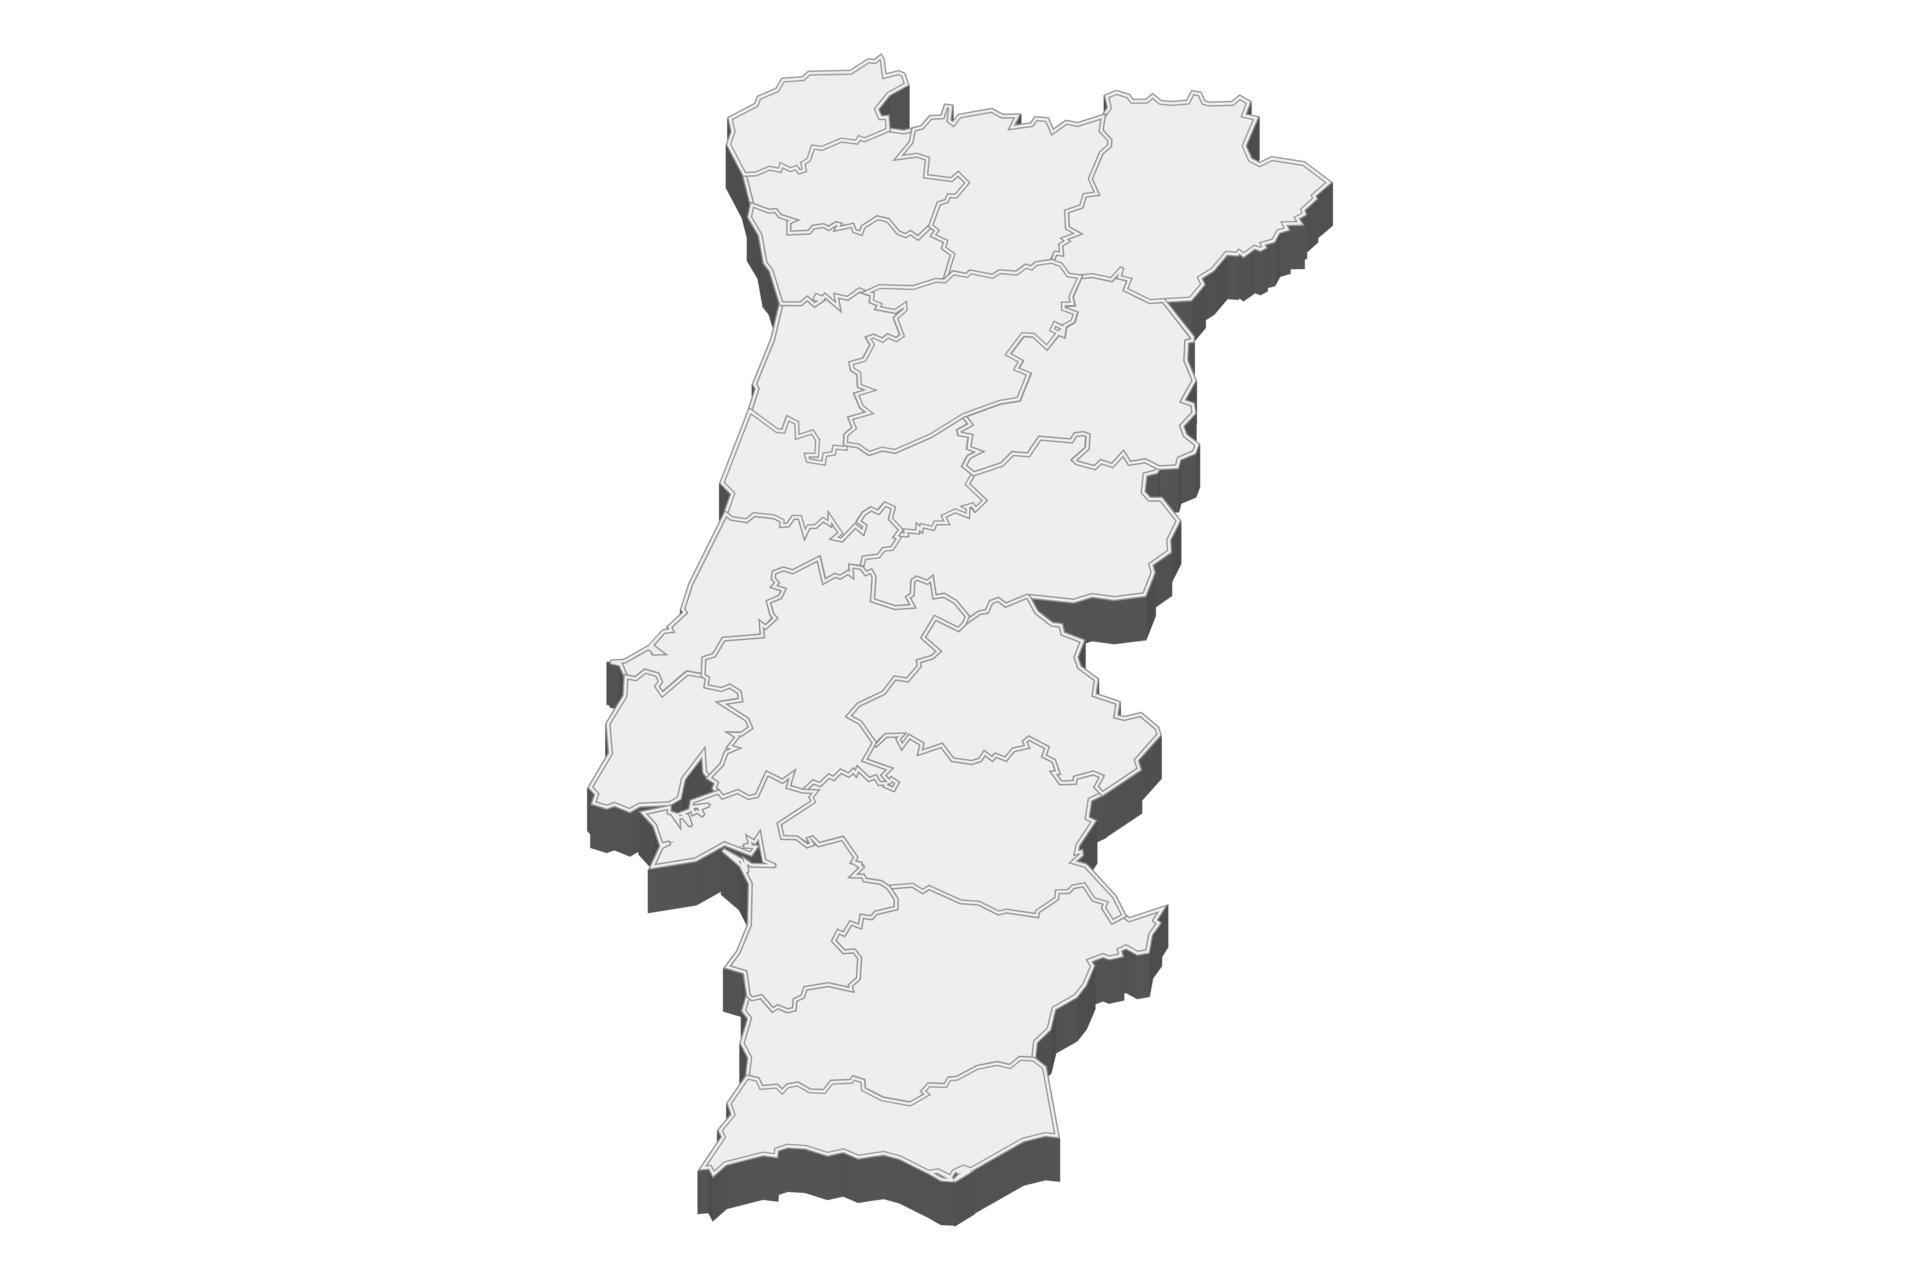 Portugal mapa png